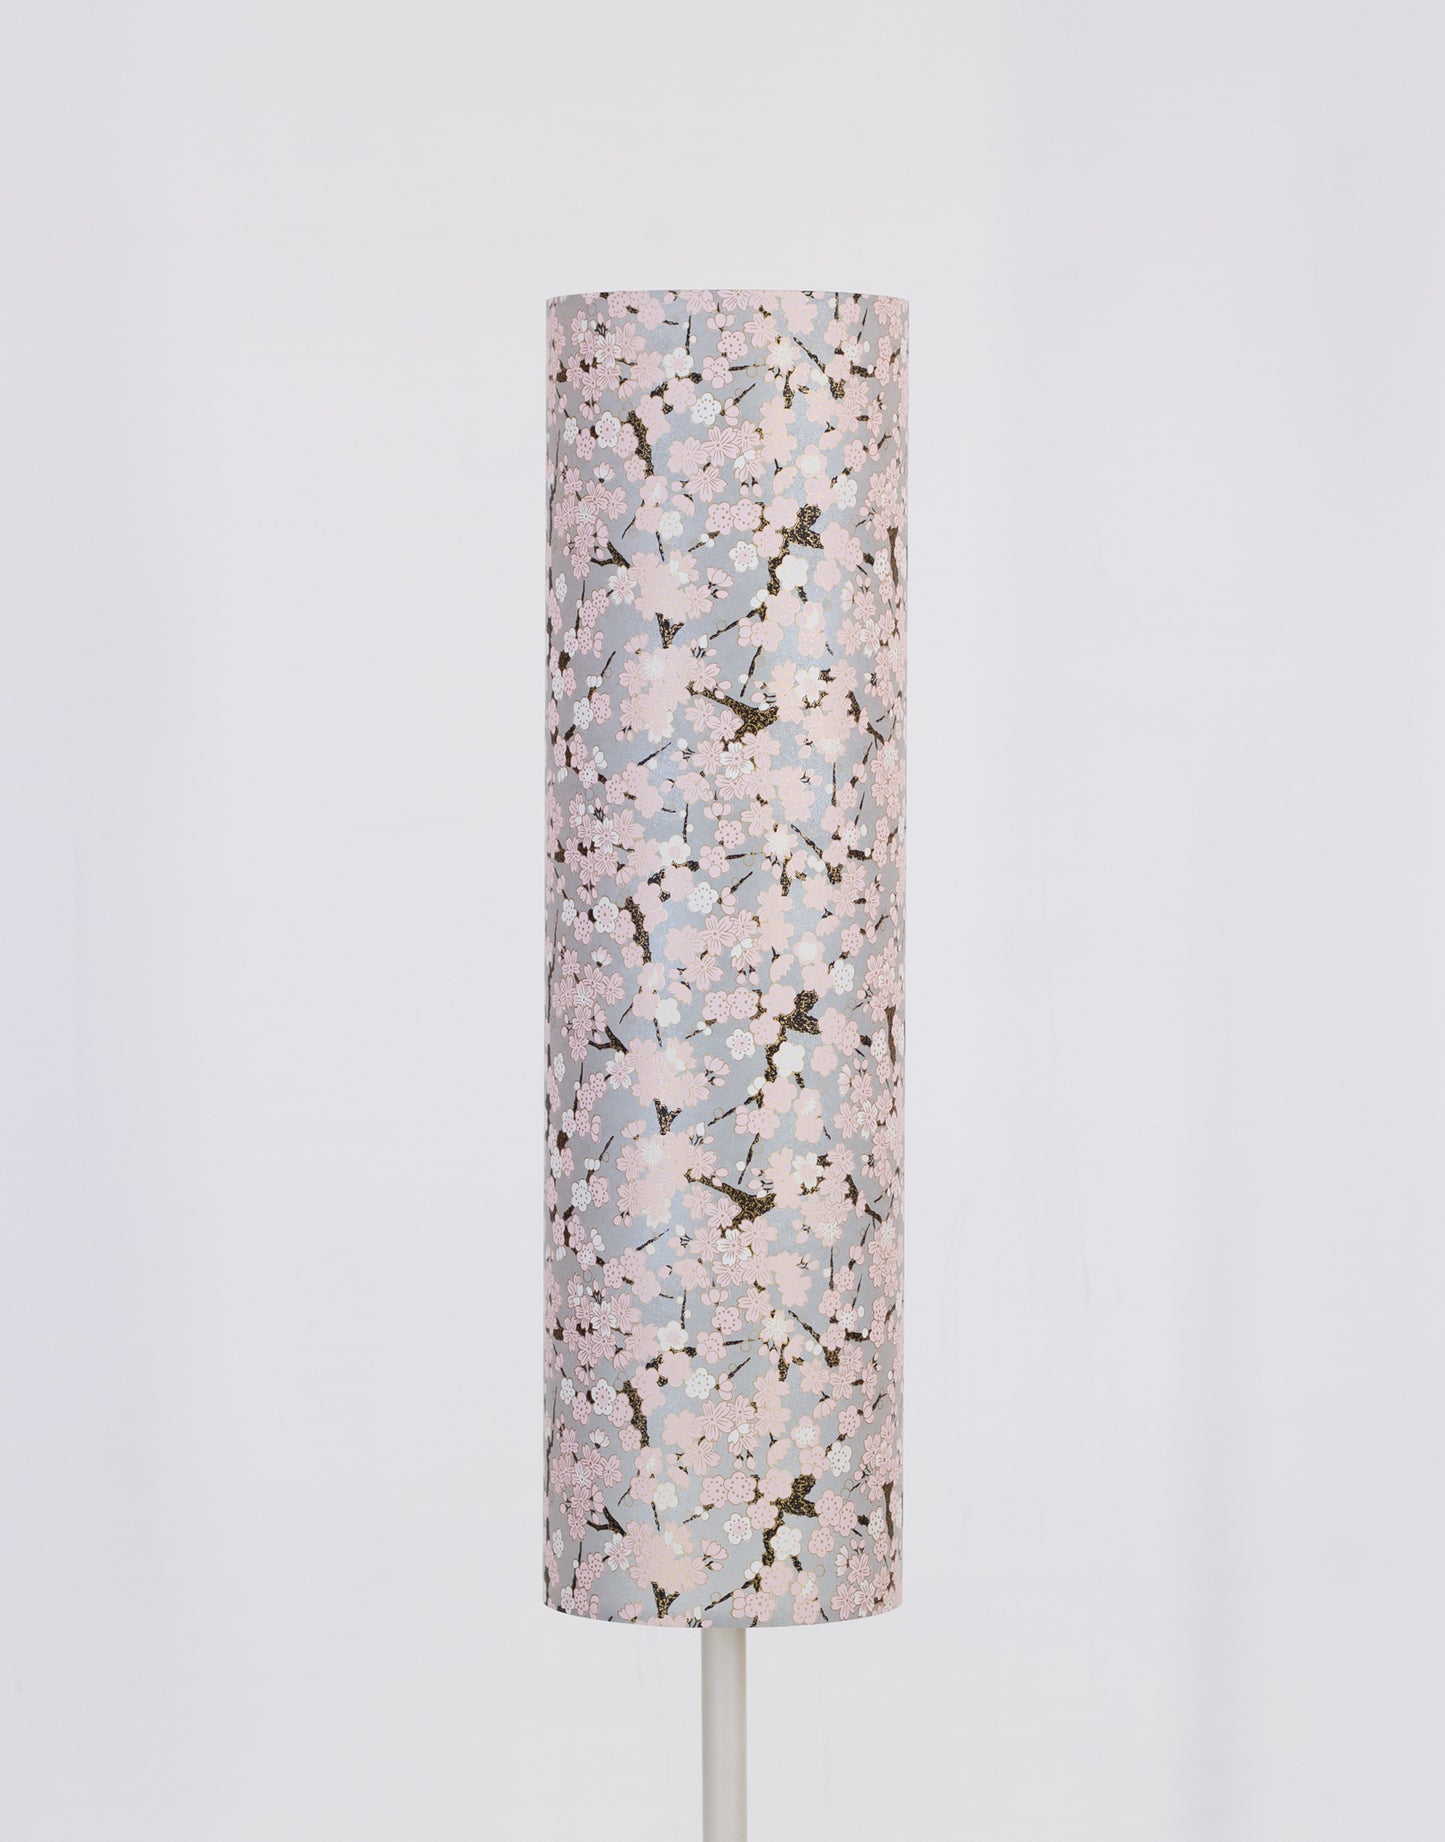 Drum Lamp Shade - W02 ~ Pink Cherry Blossom on Grey, 15cm(diameter) x 55cm(h)